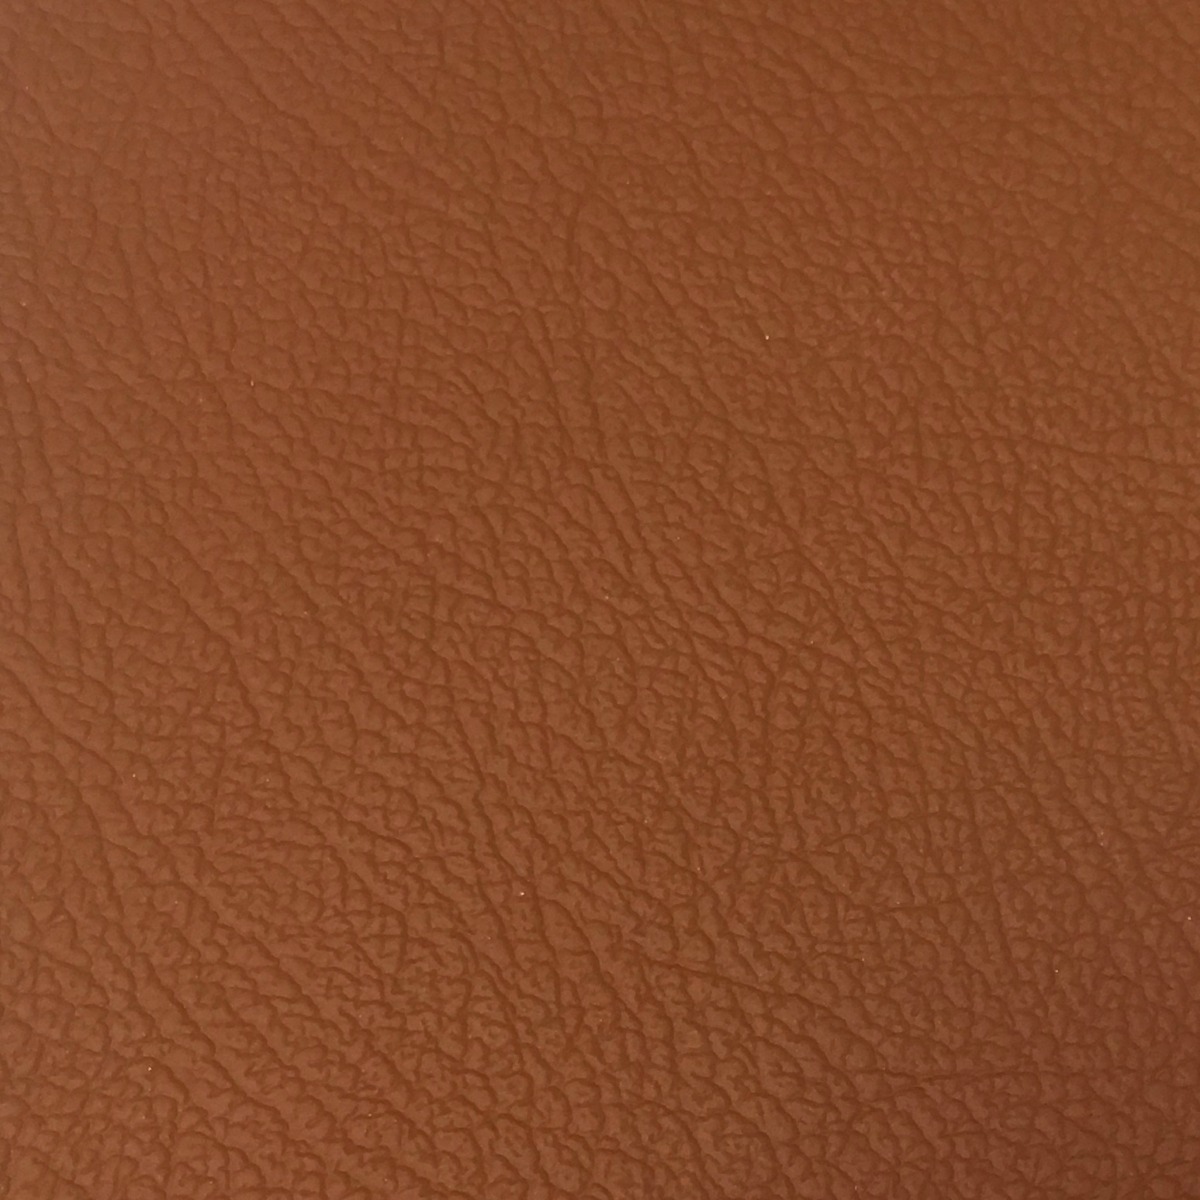 Chicane Automotive leather Sienna